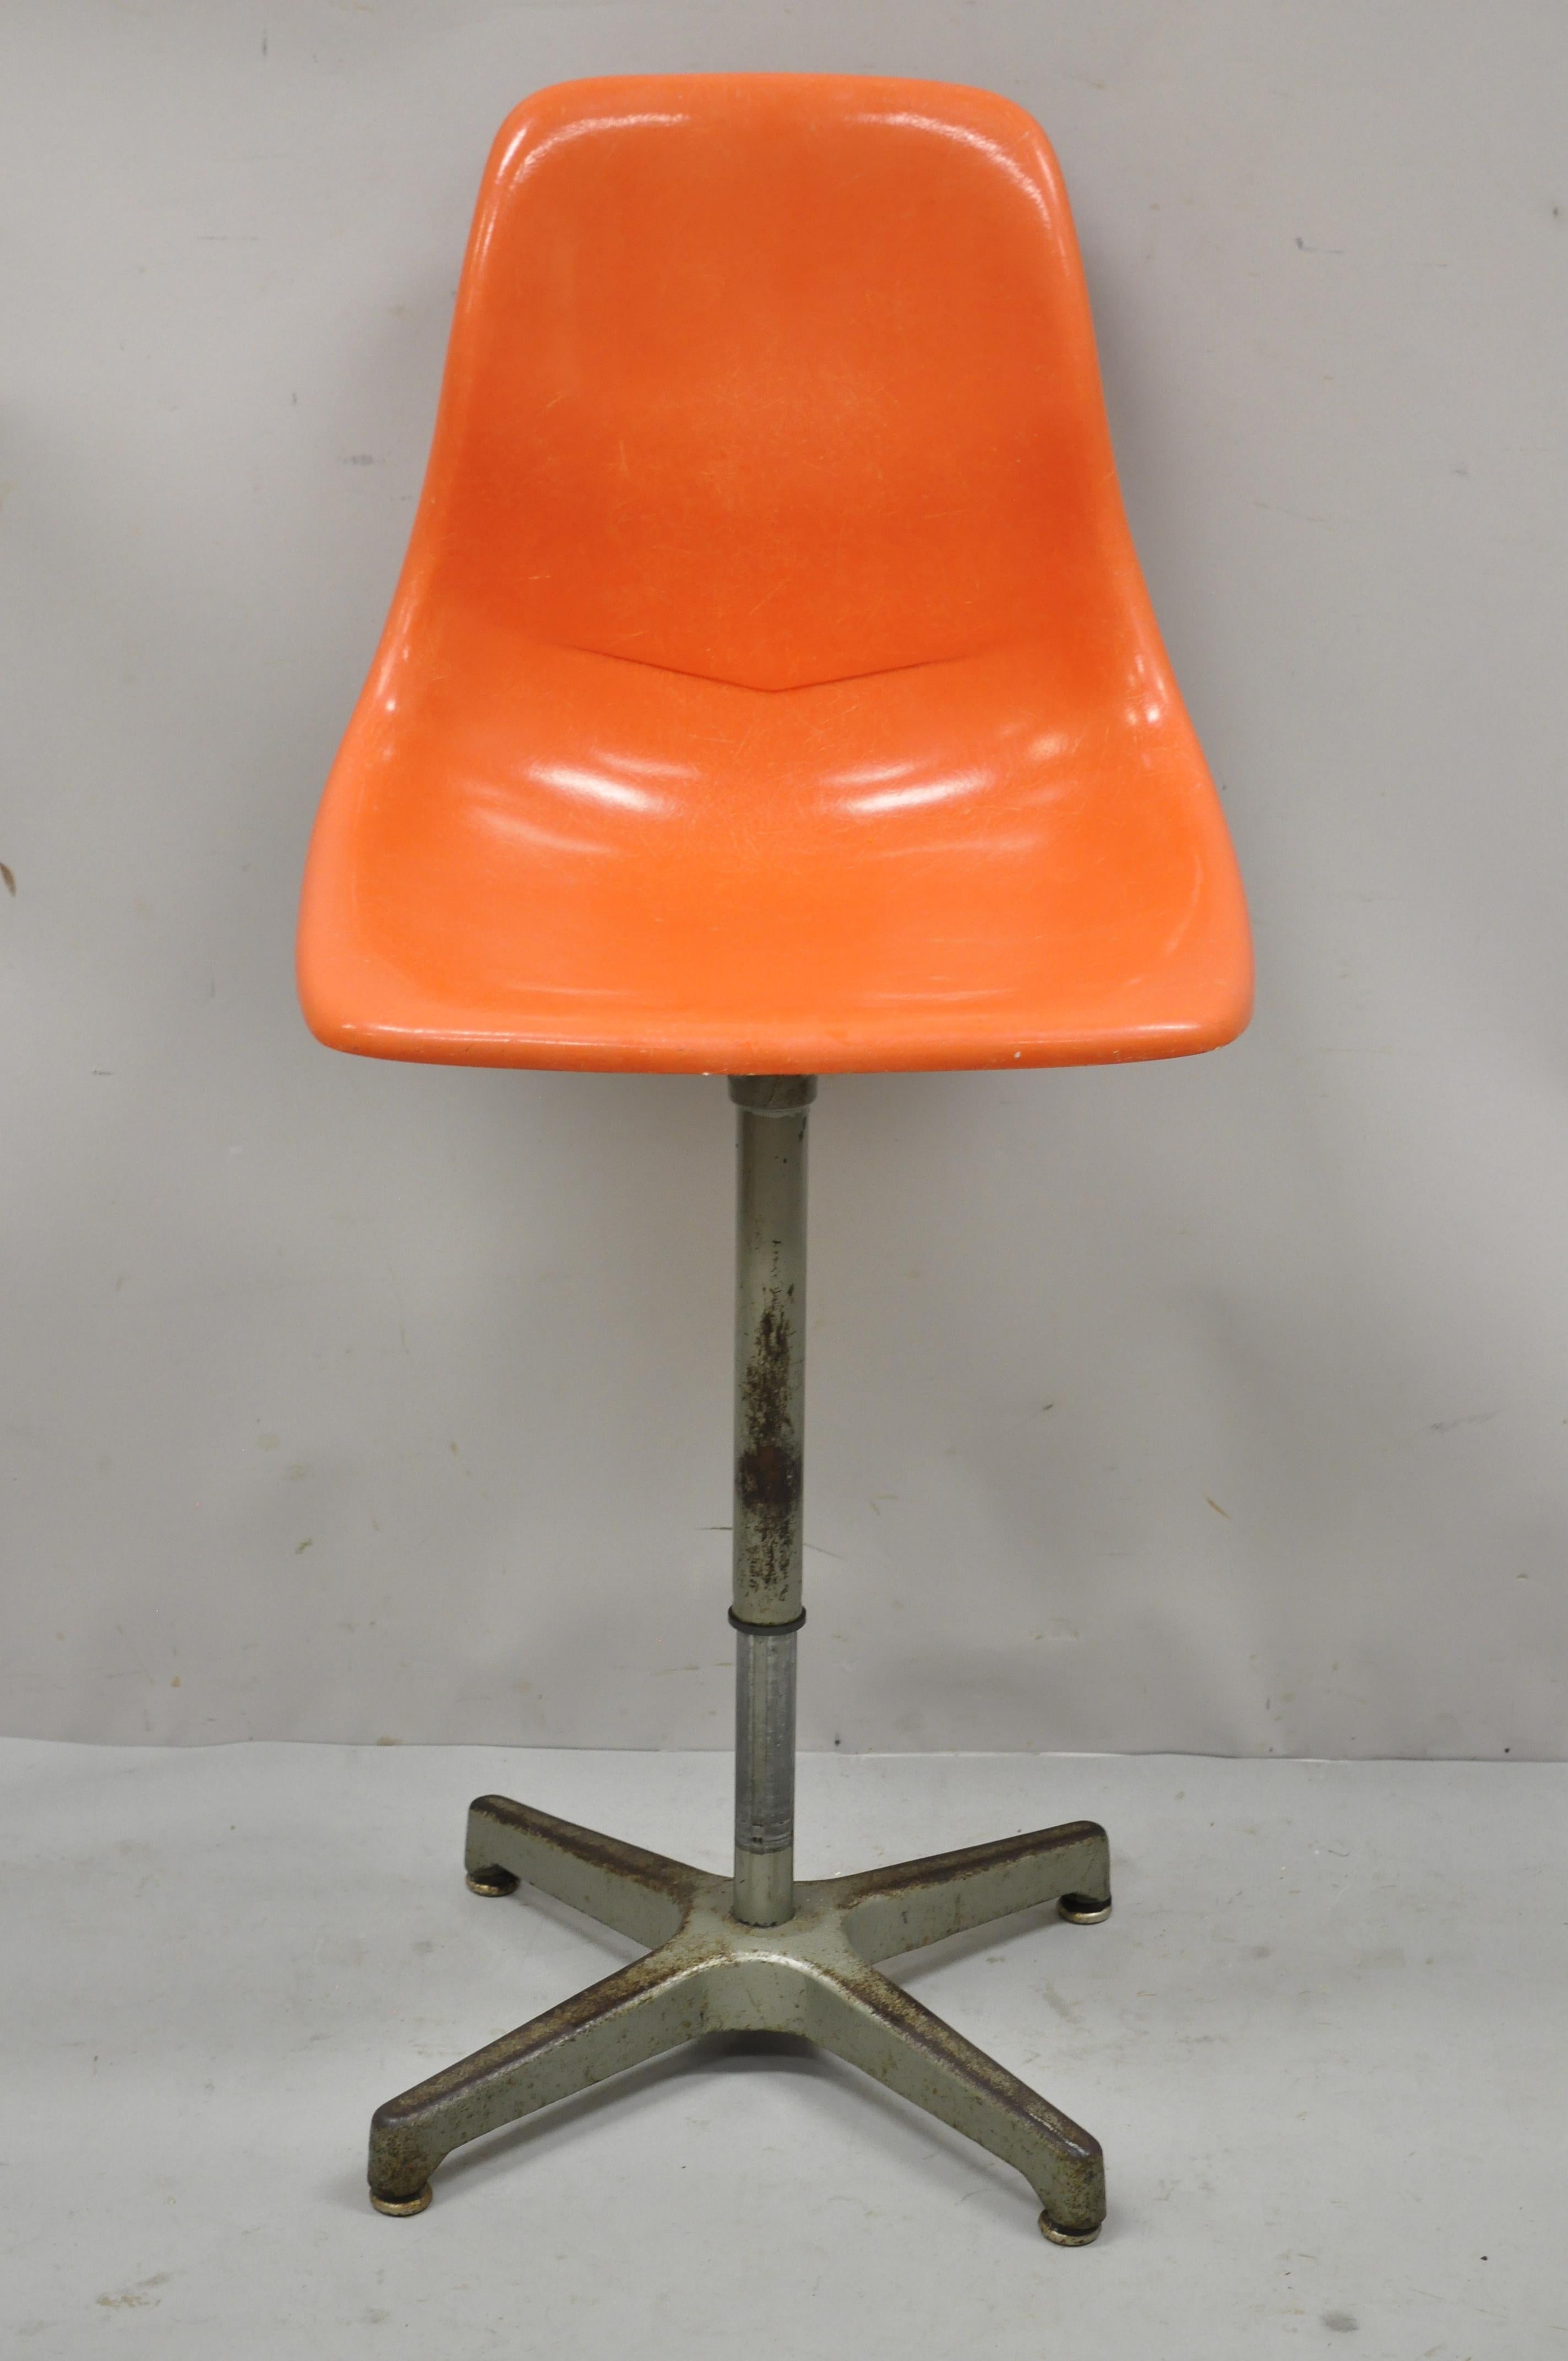 Vintage Mid-Century Modern Ajustrite orange fiberglass shell Eames style adjustable chair stool. Item features orange molded fiberglass shell seat, adjustable height base, original label, very nice vintage item, quality American craftsmanship, great